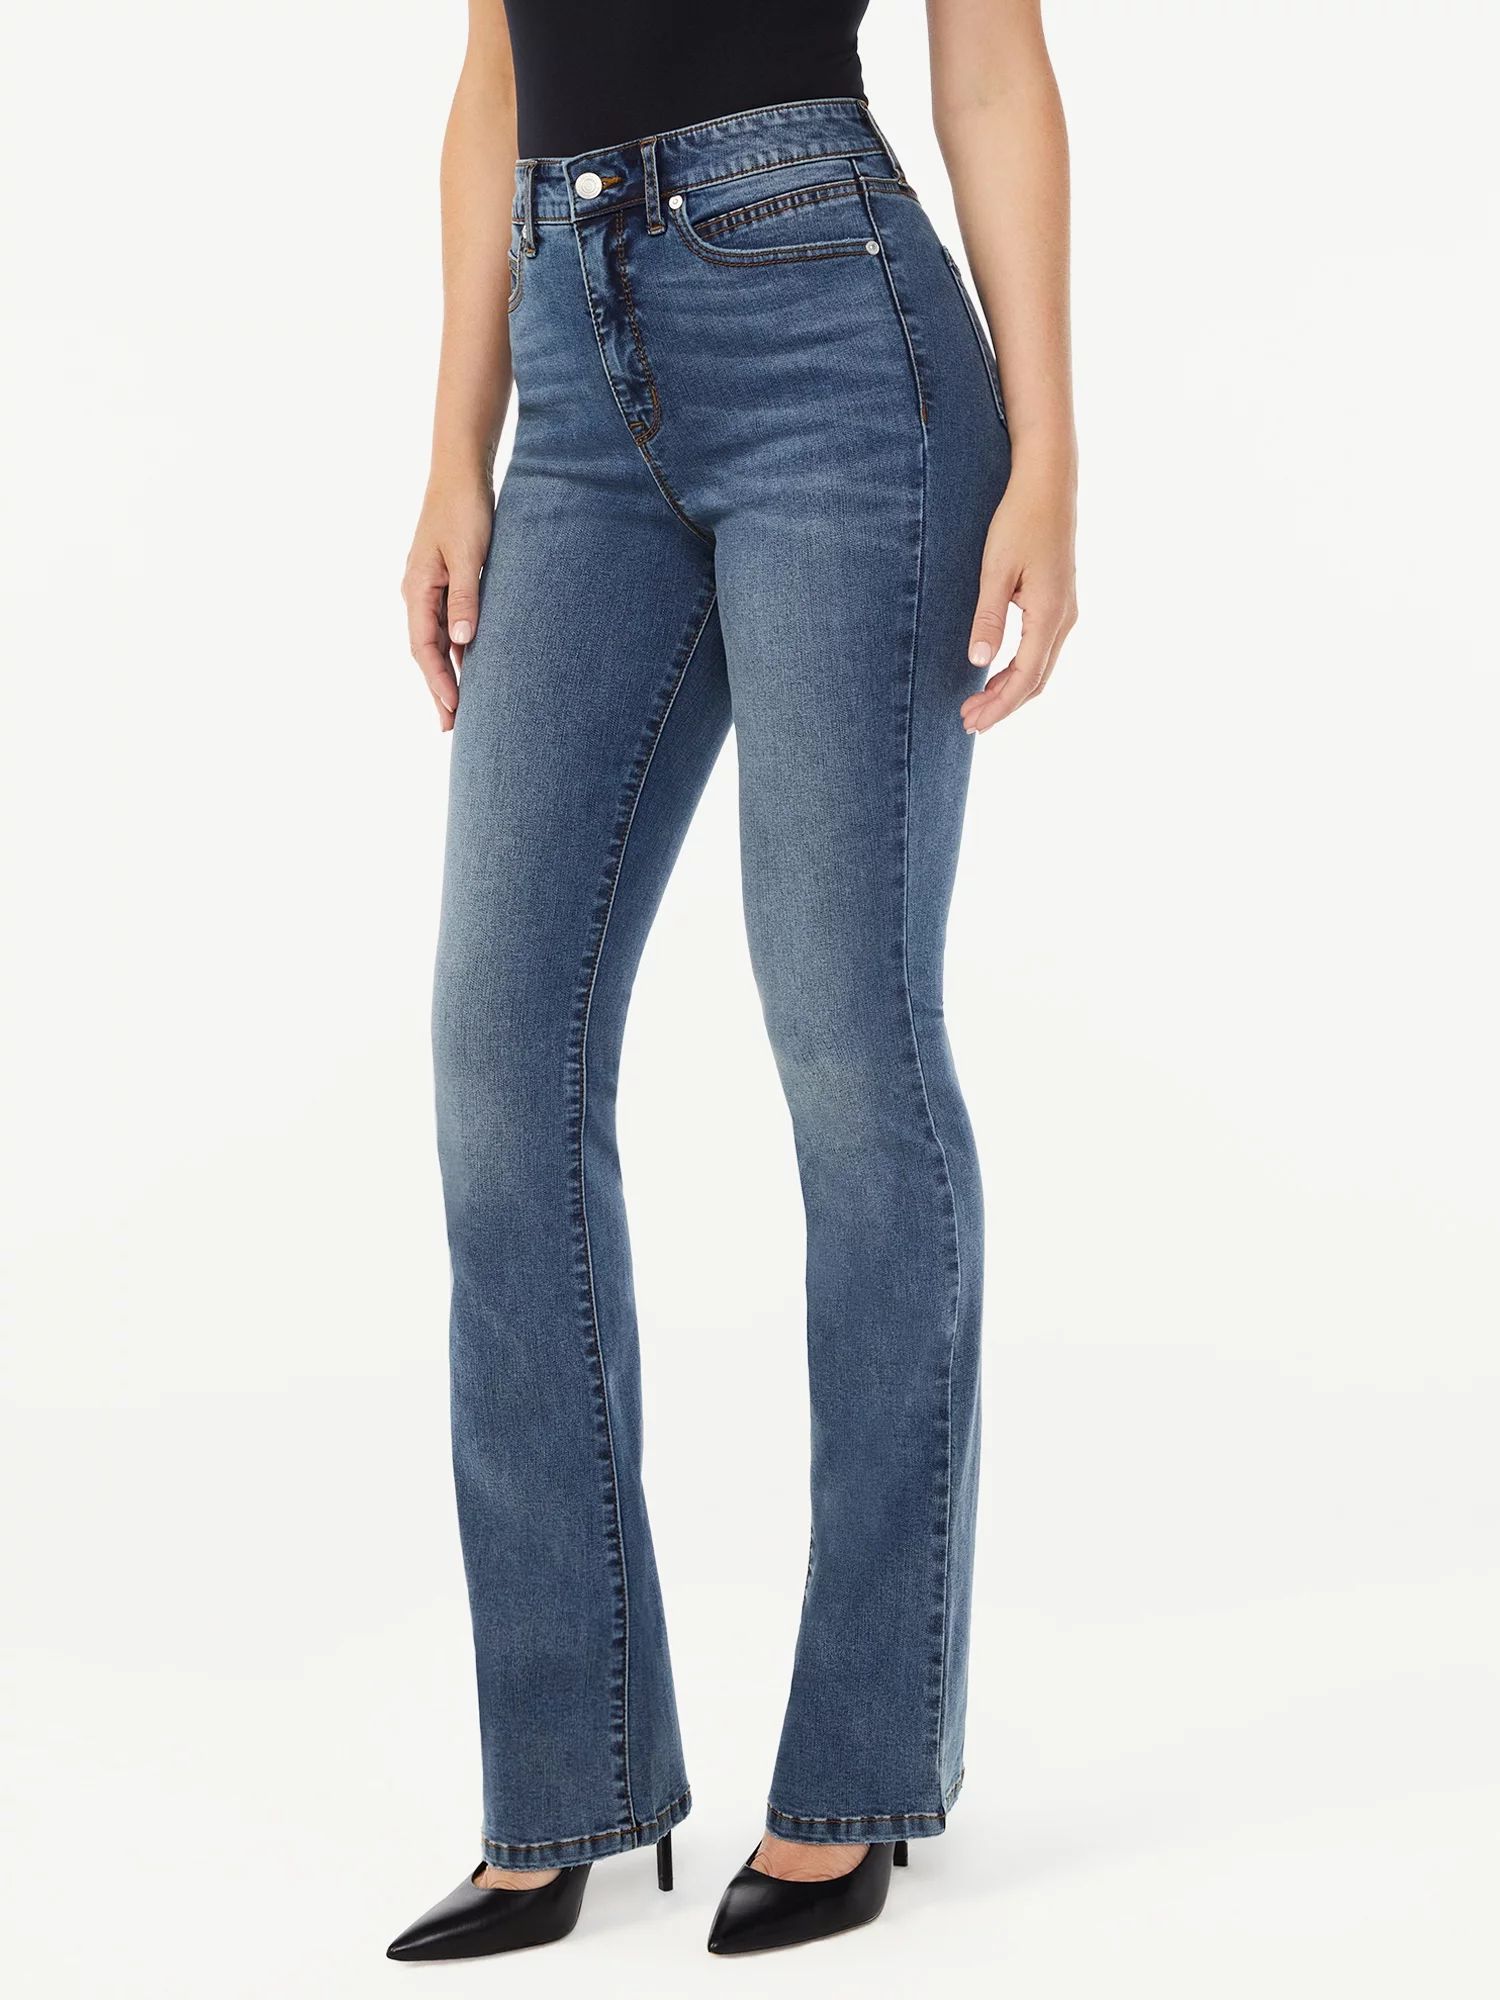 Sofia Jeans Women's Marisol Curvy Bootcut Super High Rise Jeans | Walmart (US)